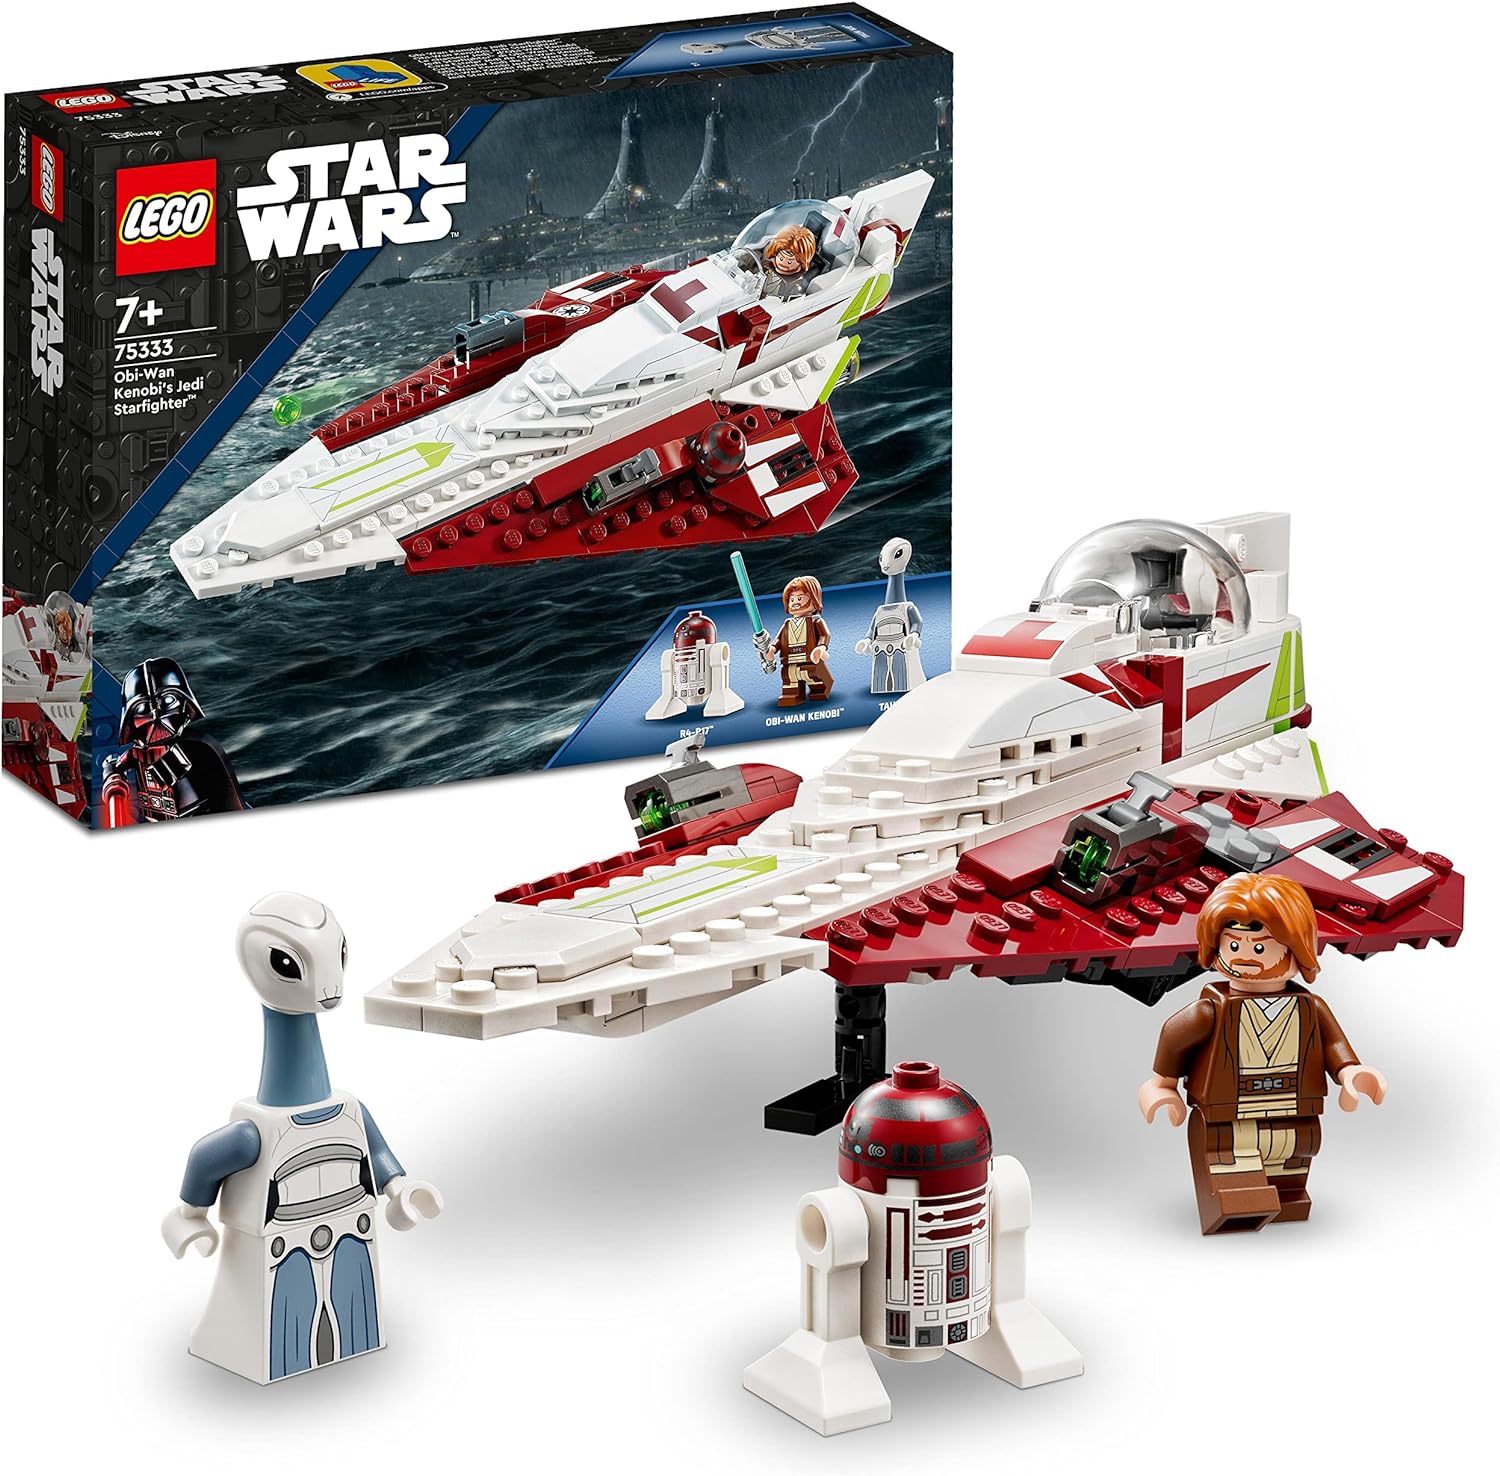 Lego 75333 Obi Wan Kenobis Jedi Fighter